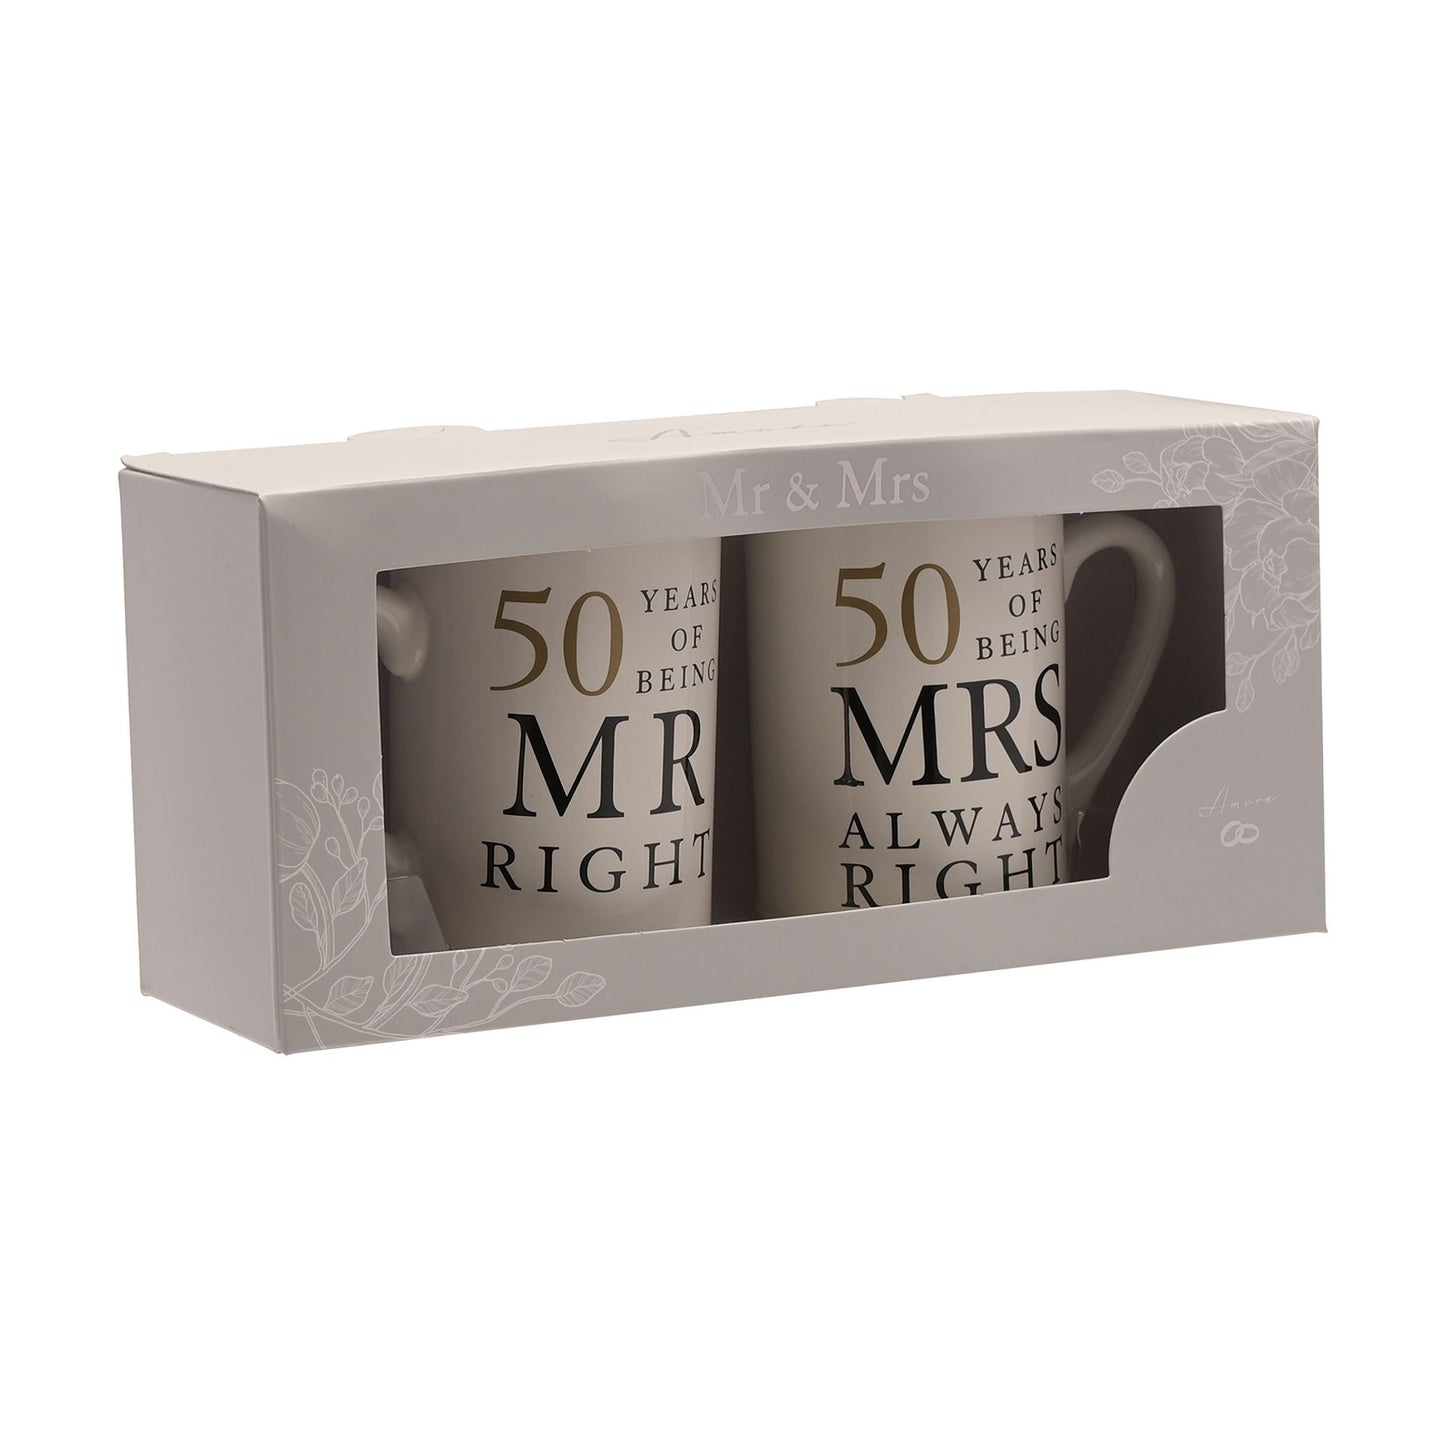 50th Wedding Anniversary Mugs - "Mr Right & Mrs Always Right"